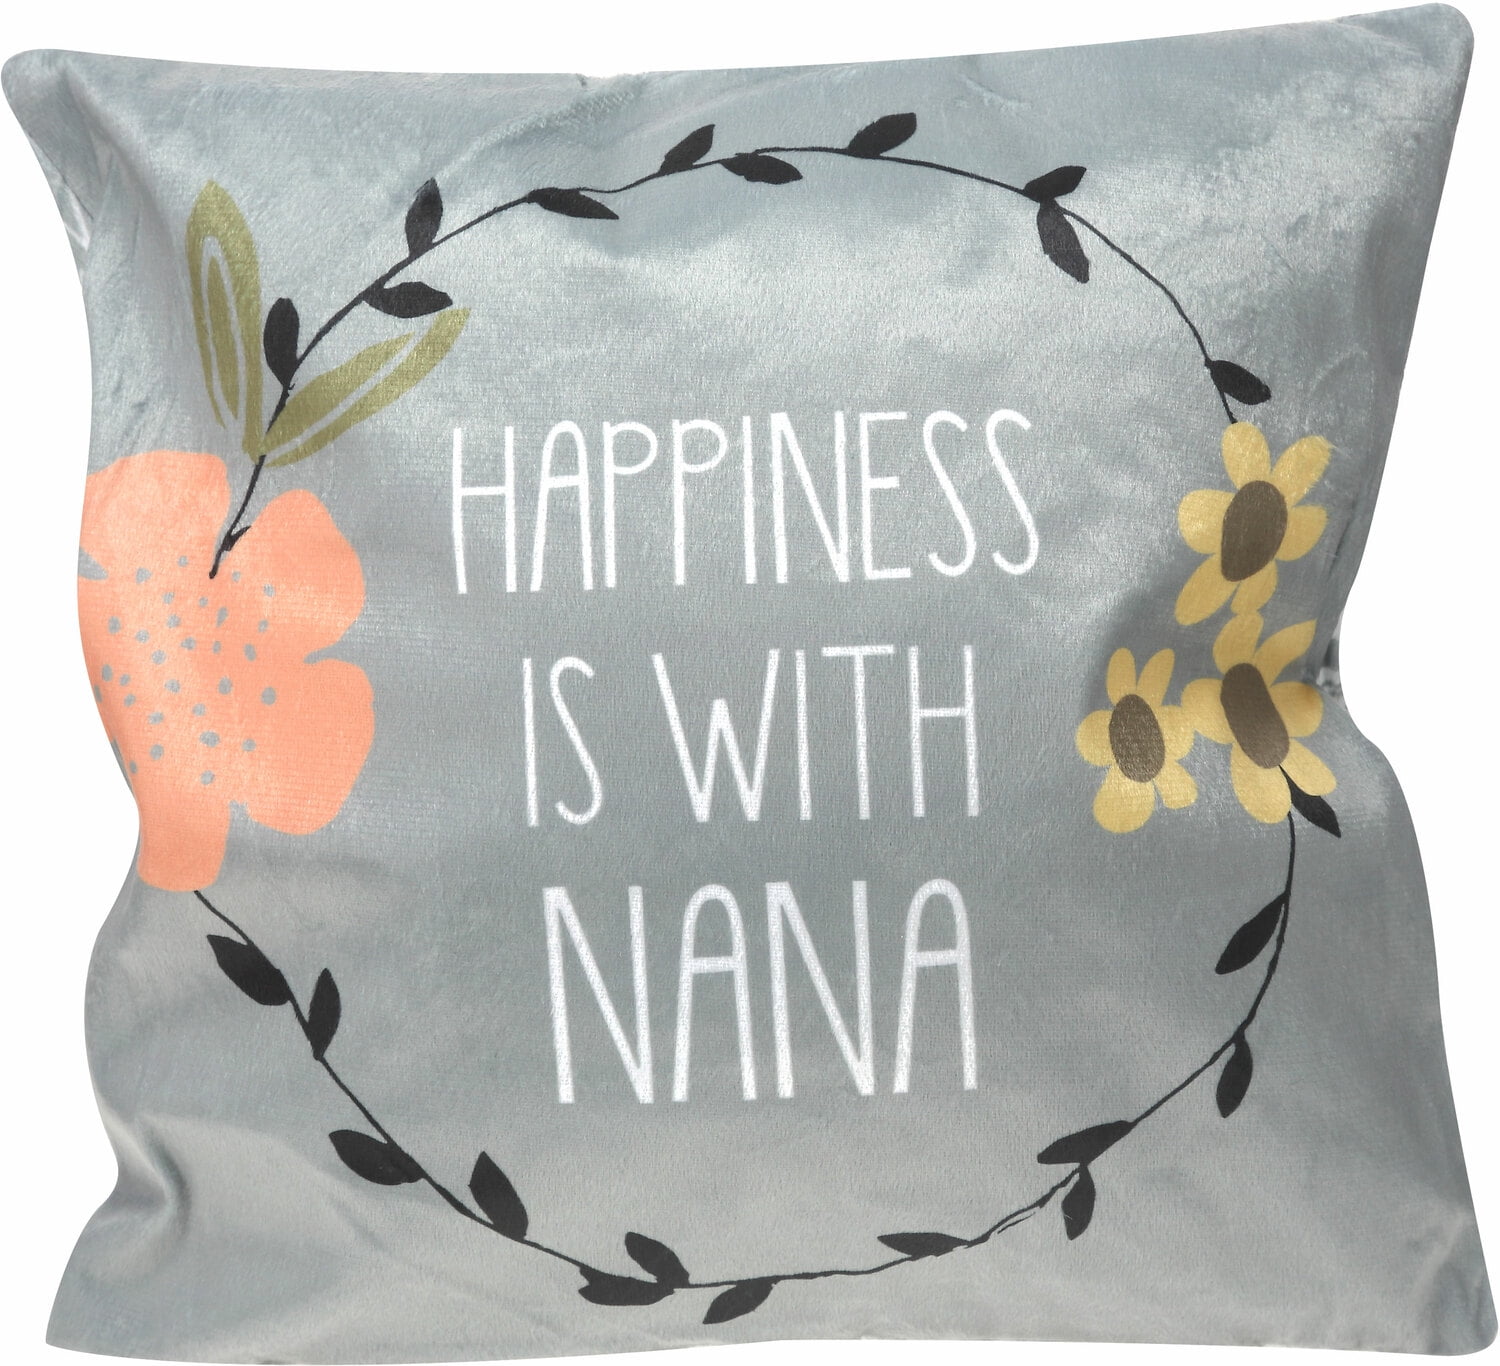 NANA Decorative Throw Pillows Funny Naturel Cute Wild Animal Sheep Teen Decor Pillows 13.78 X 13.78 Inch Heart-Shaped Cushion Gift for Friends/Children/Girl/Valentine's Day